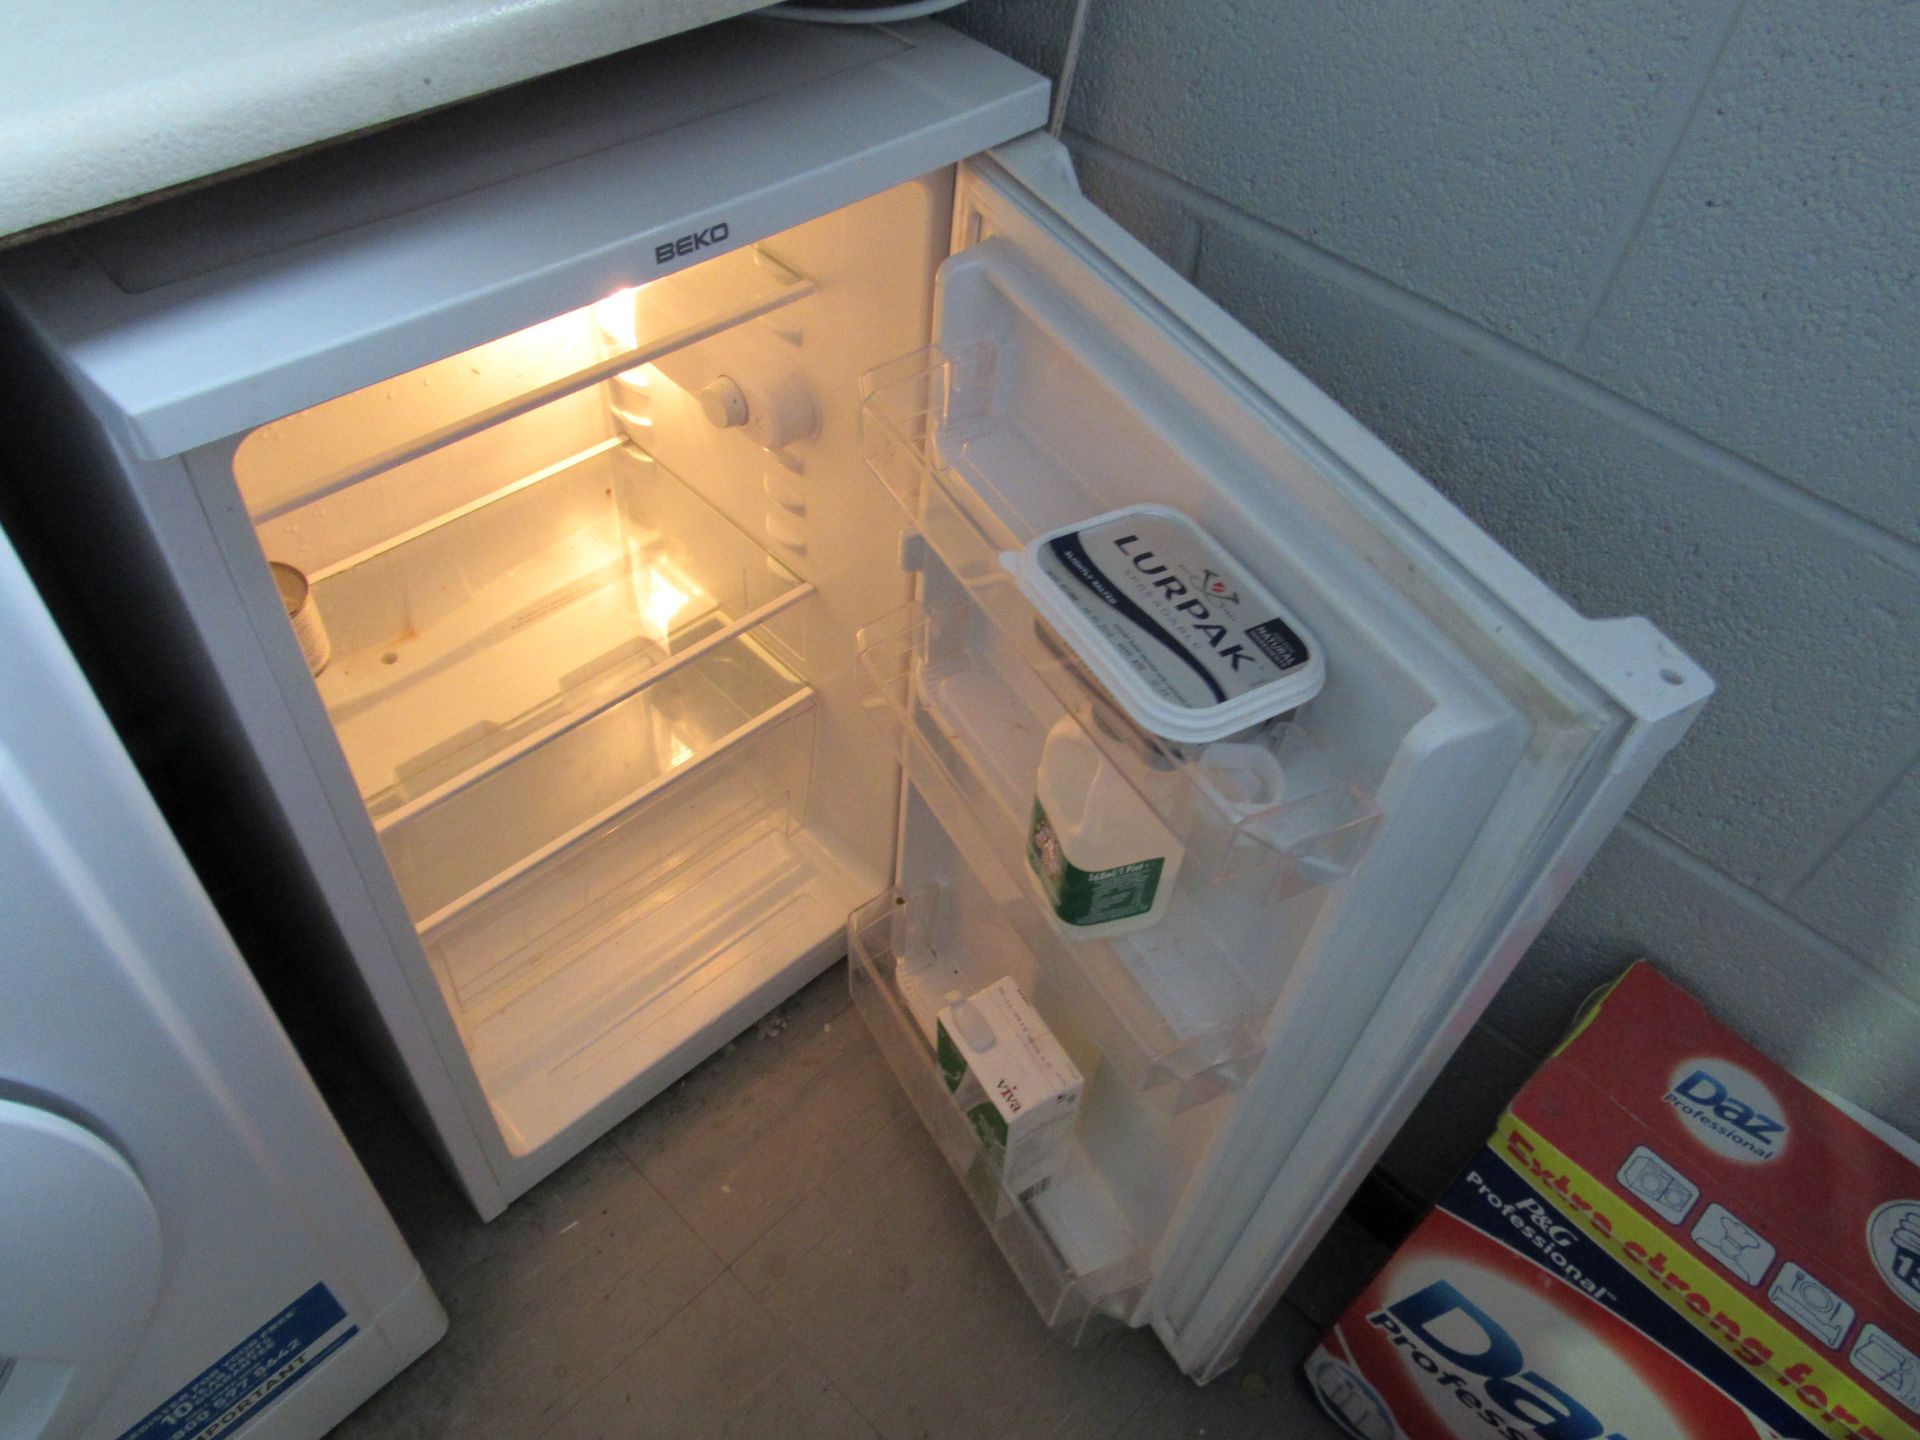 Beko undercounter fridge, Panasonic Microwave, and Kenwood Toaster - Image 3 of 3